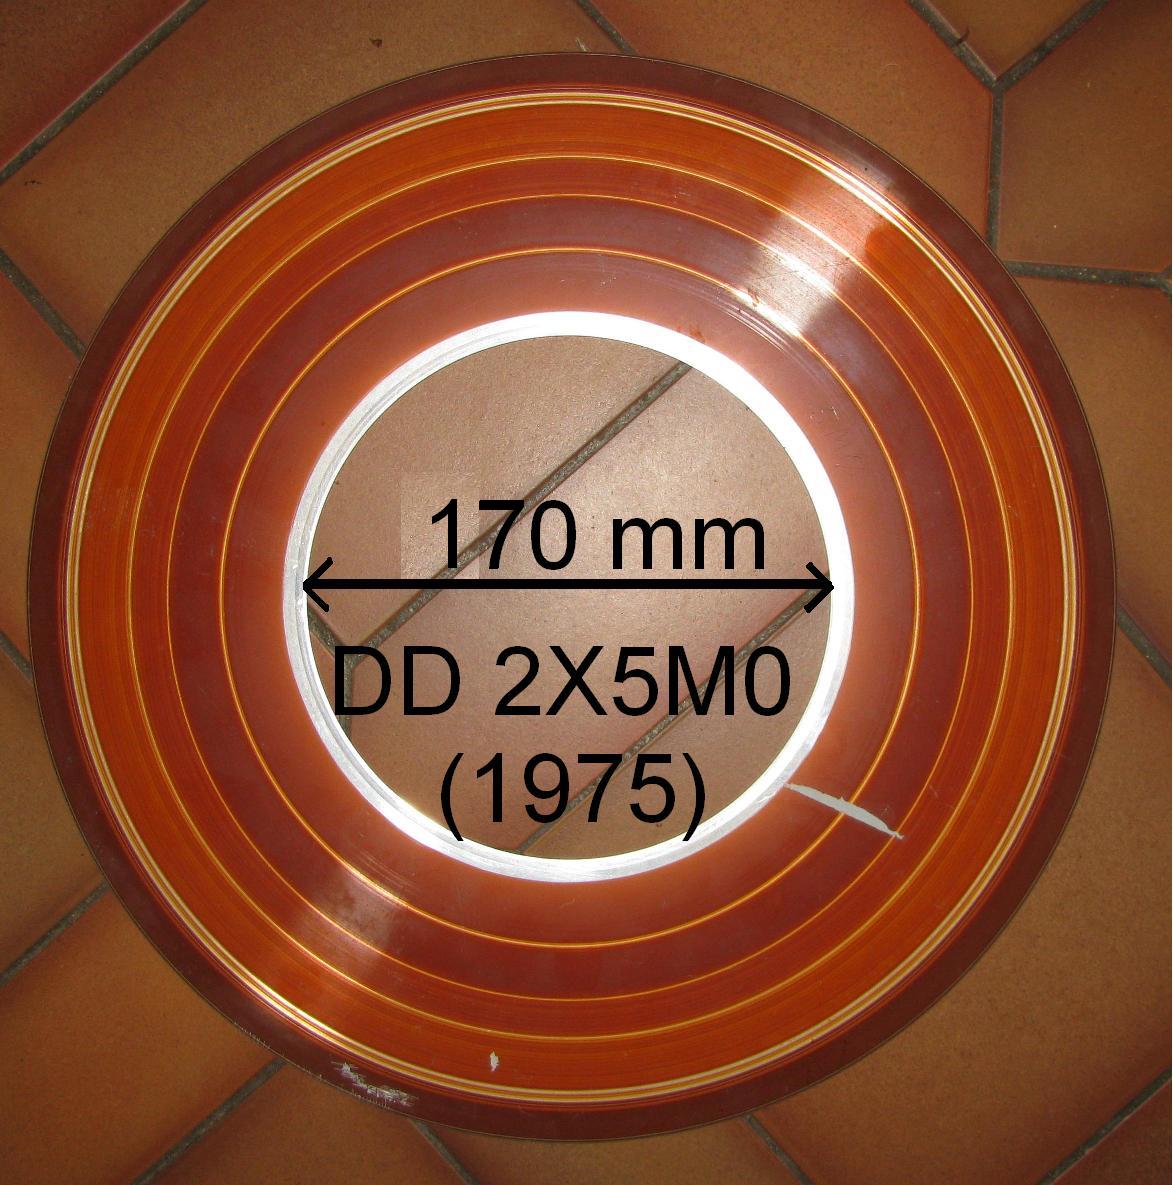 Nom : disque dur 1975 2x5Mo.JPG
Affichages : 143
Taille : 192,8 Ko